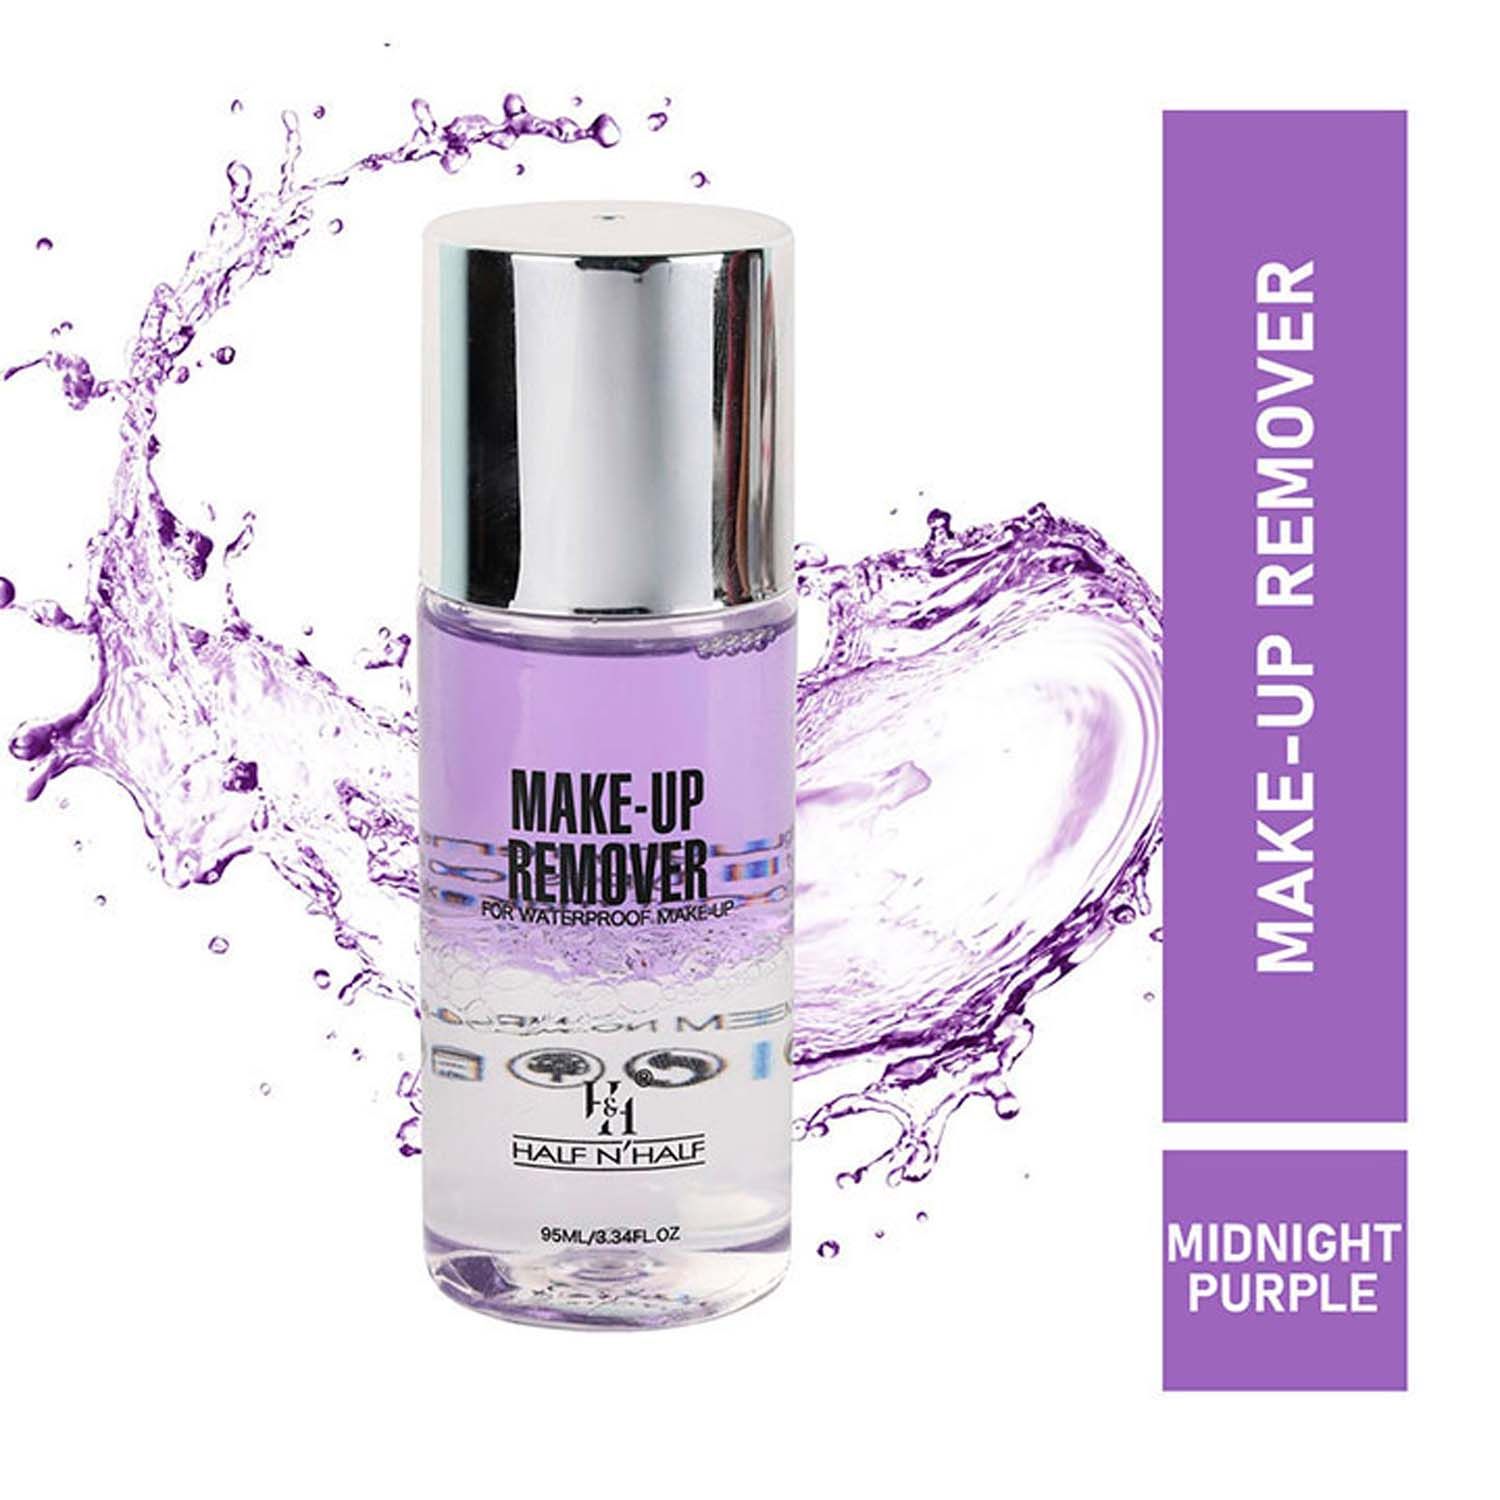 Buy Half N Half Make-up Remover for Waterproof Make-up, Midnight Purple (95ml) - Purplle